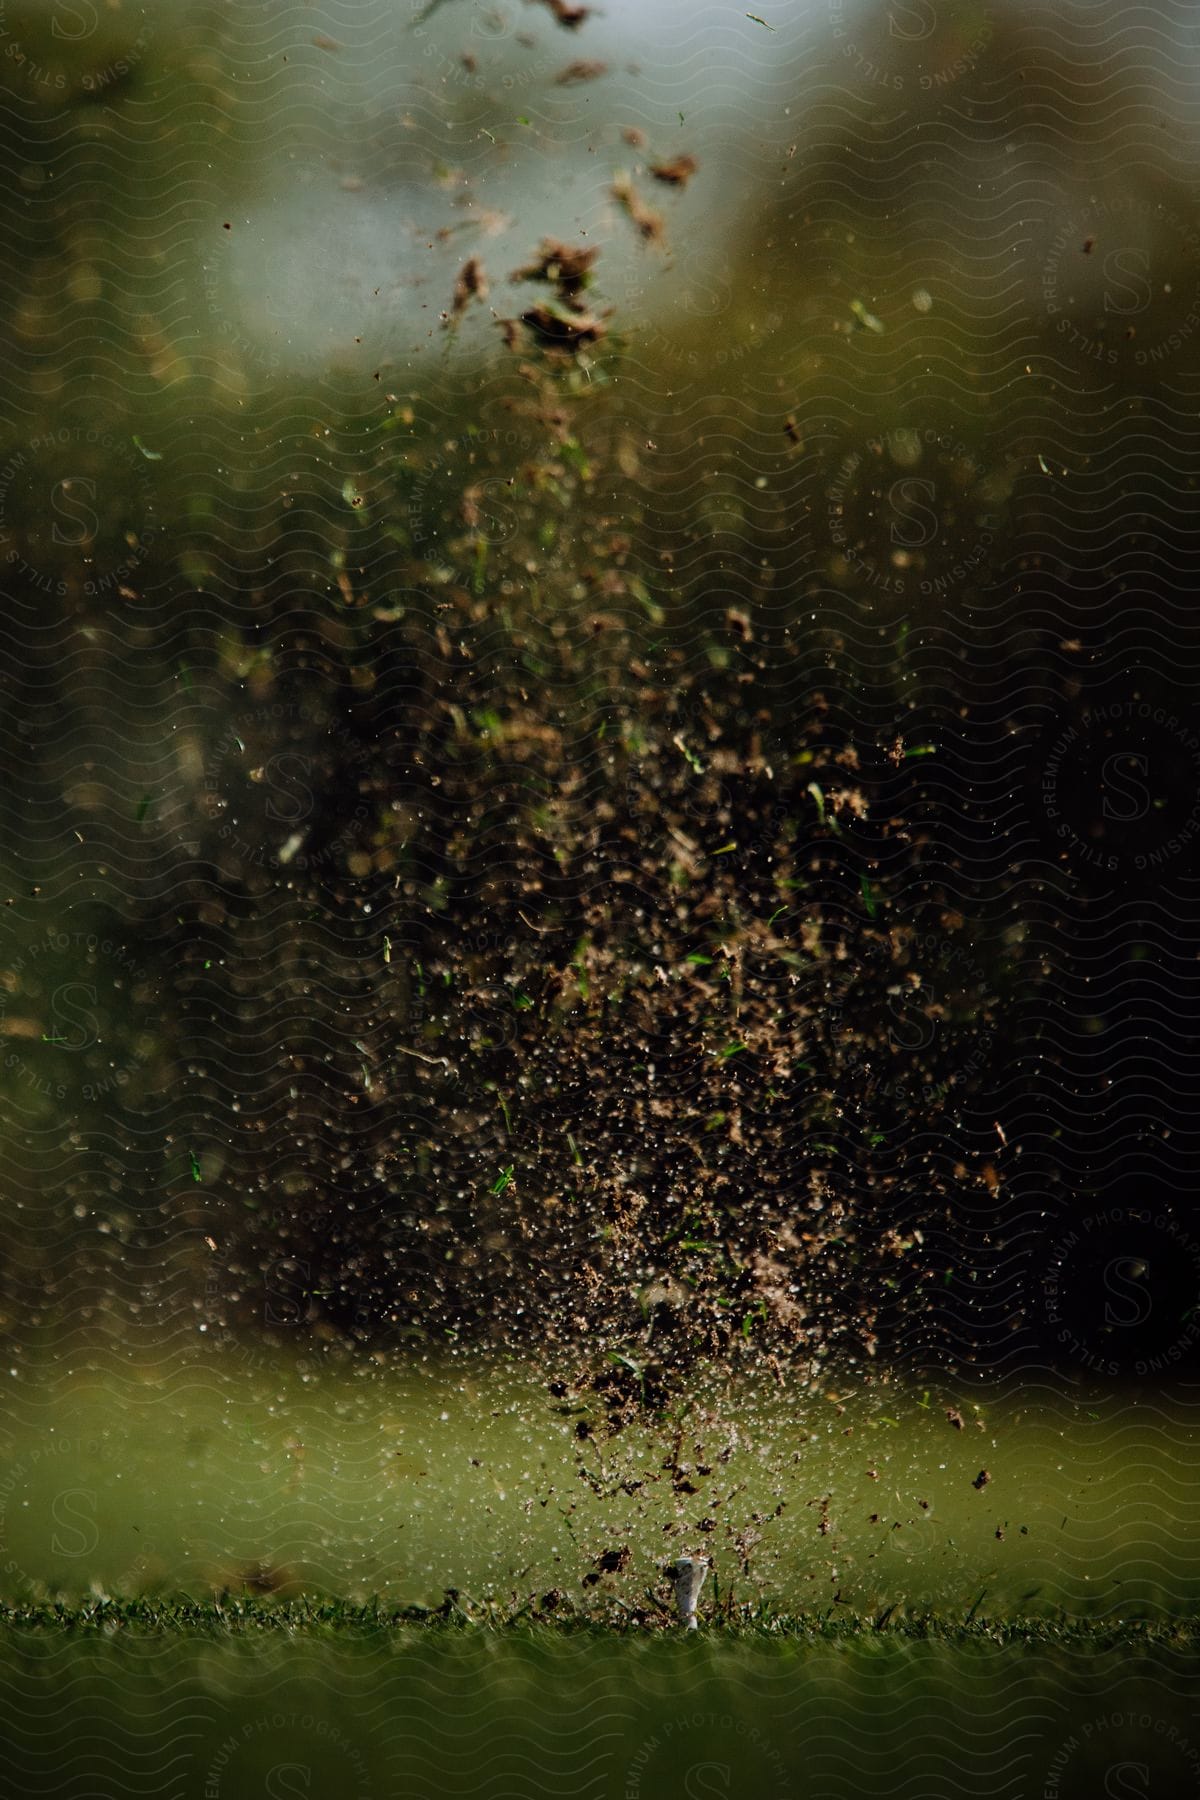 Dirt and grass debris flies into the air over golf tee after golf ball has been hit.